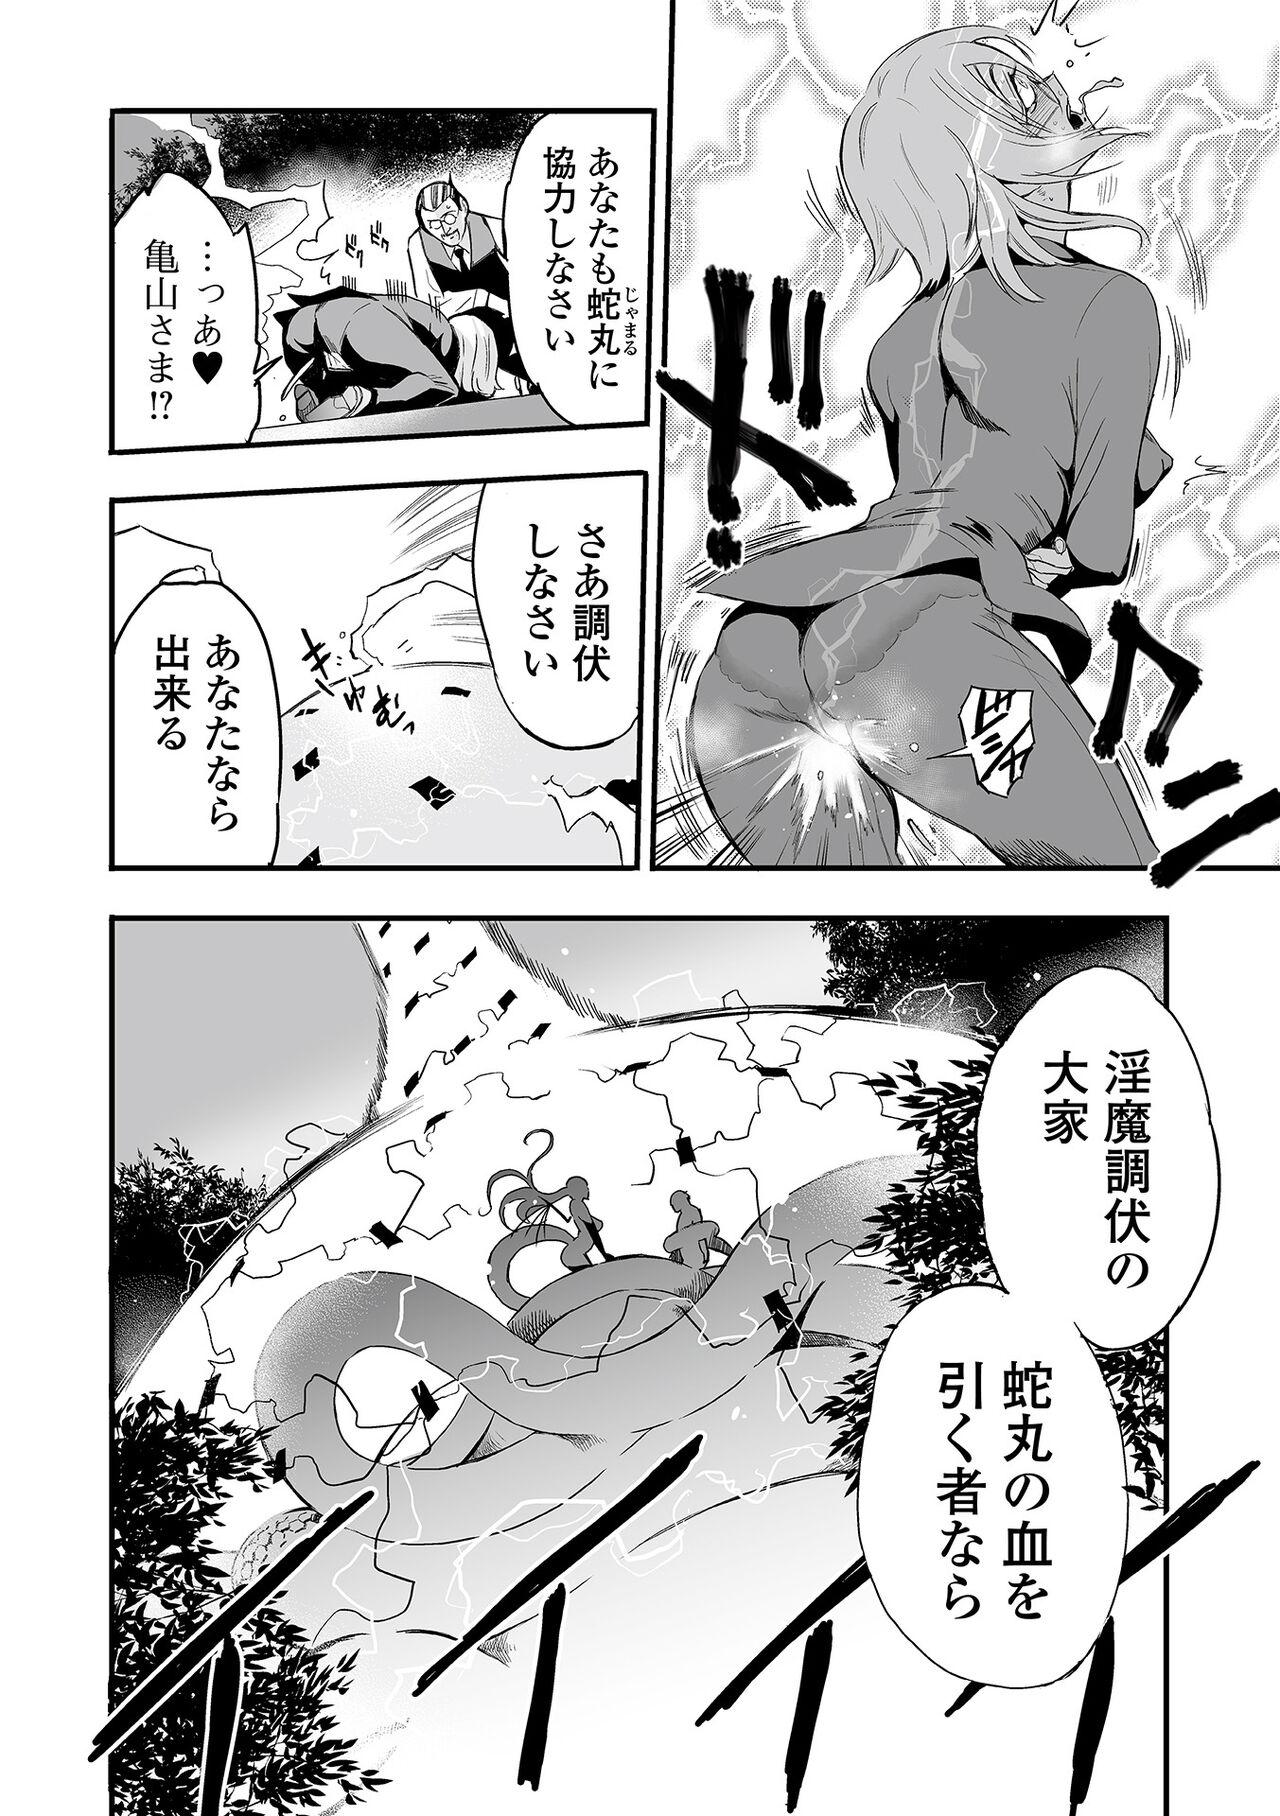 Macho Web Comic Toutetsu Vol. 83 Peitos - Page 8